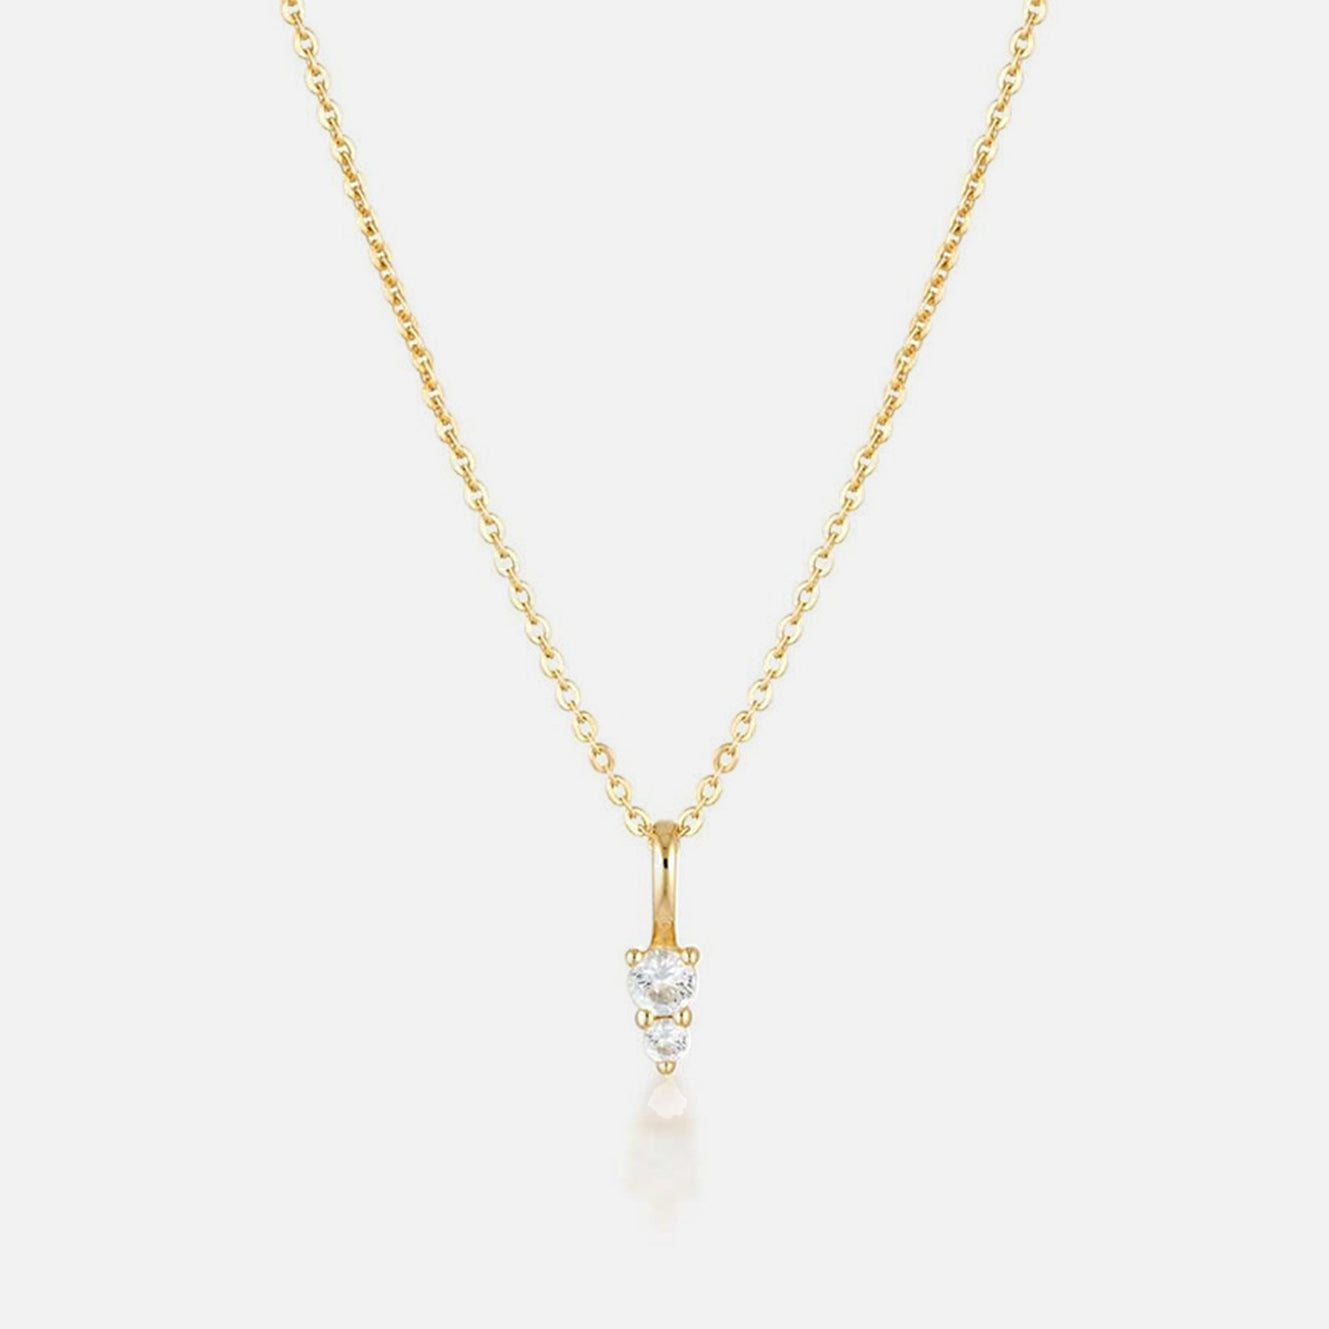 Linda Tahija - Binary Gemstone Necklace - Gold Plated - White Topaz